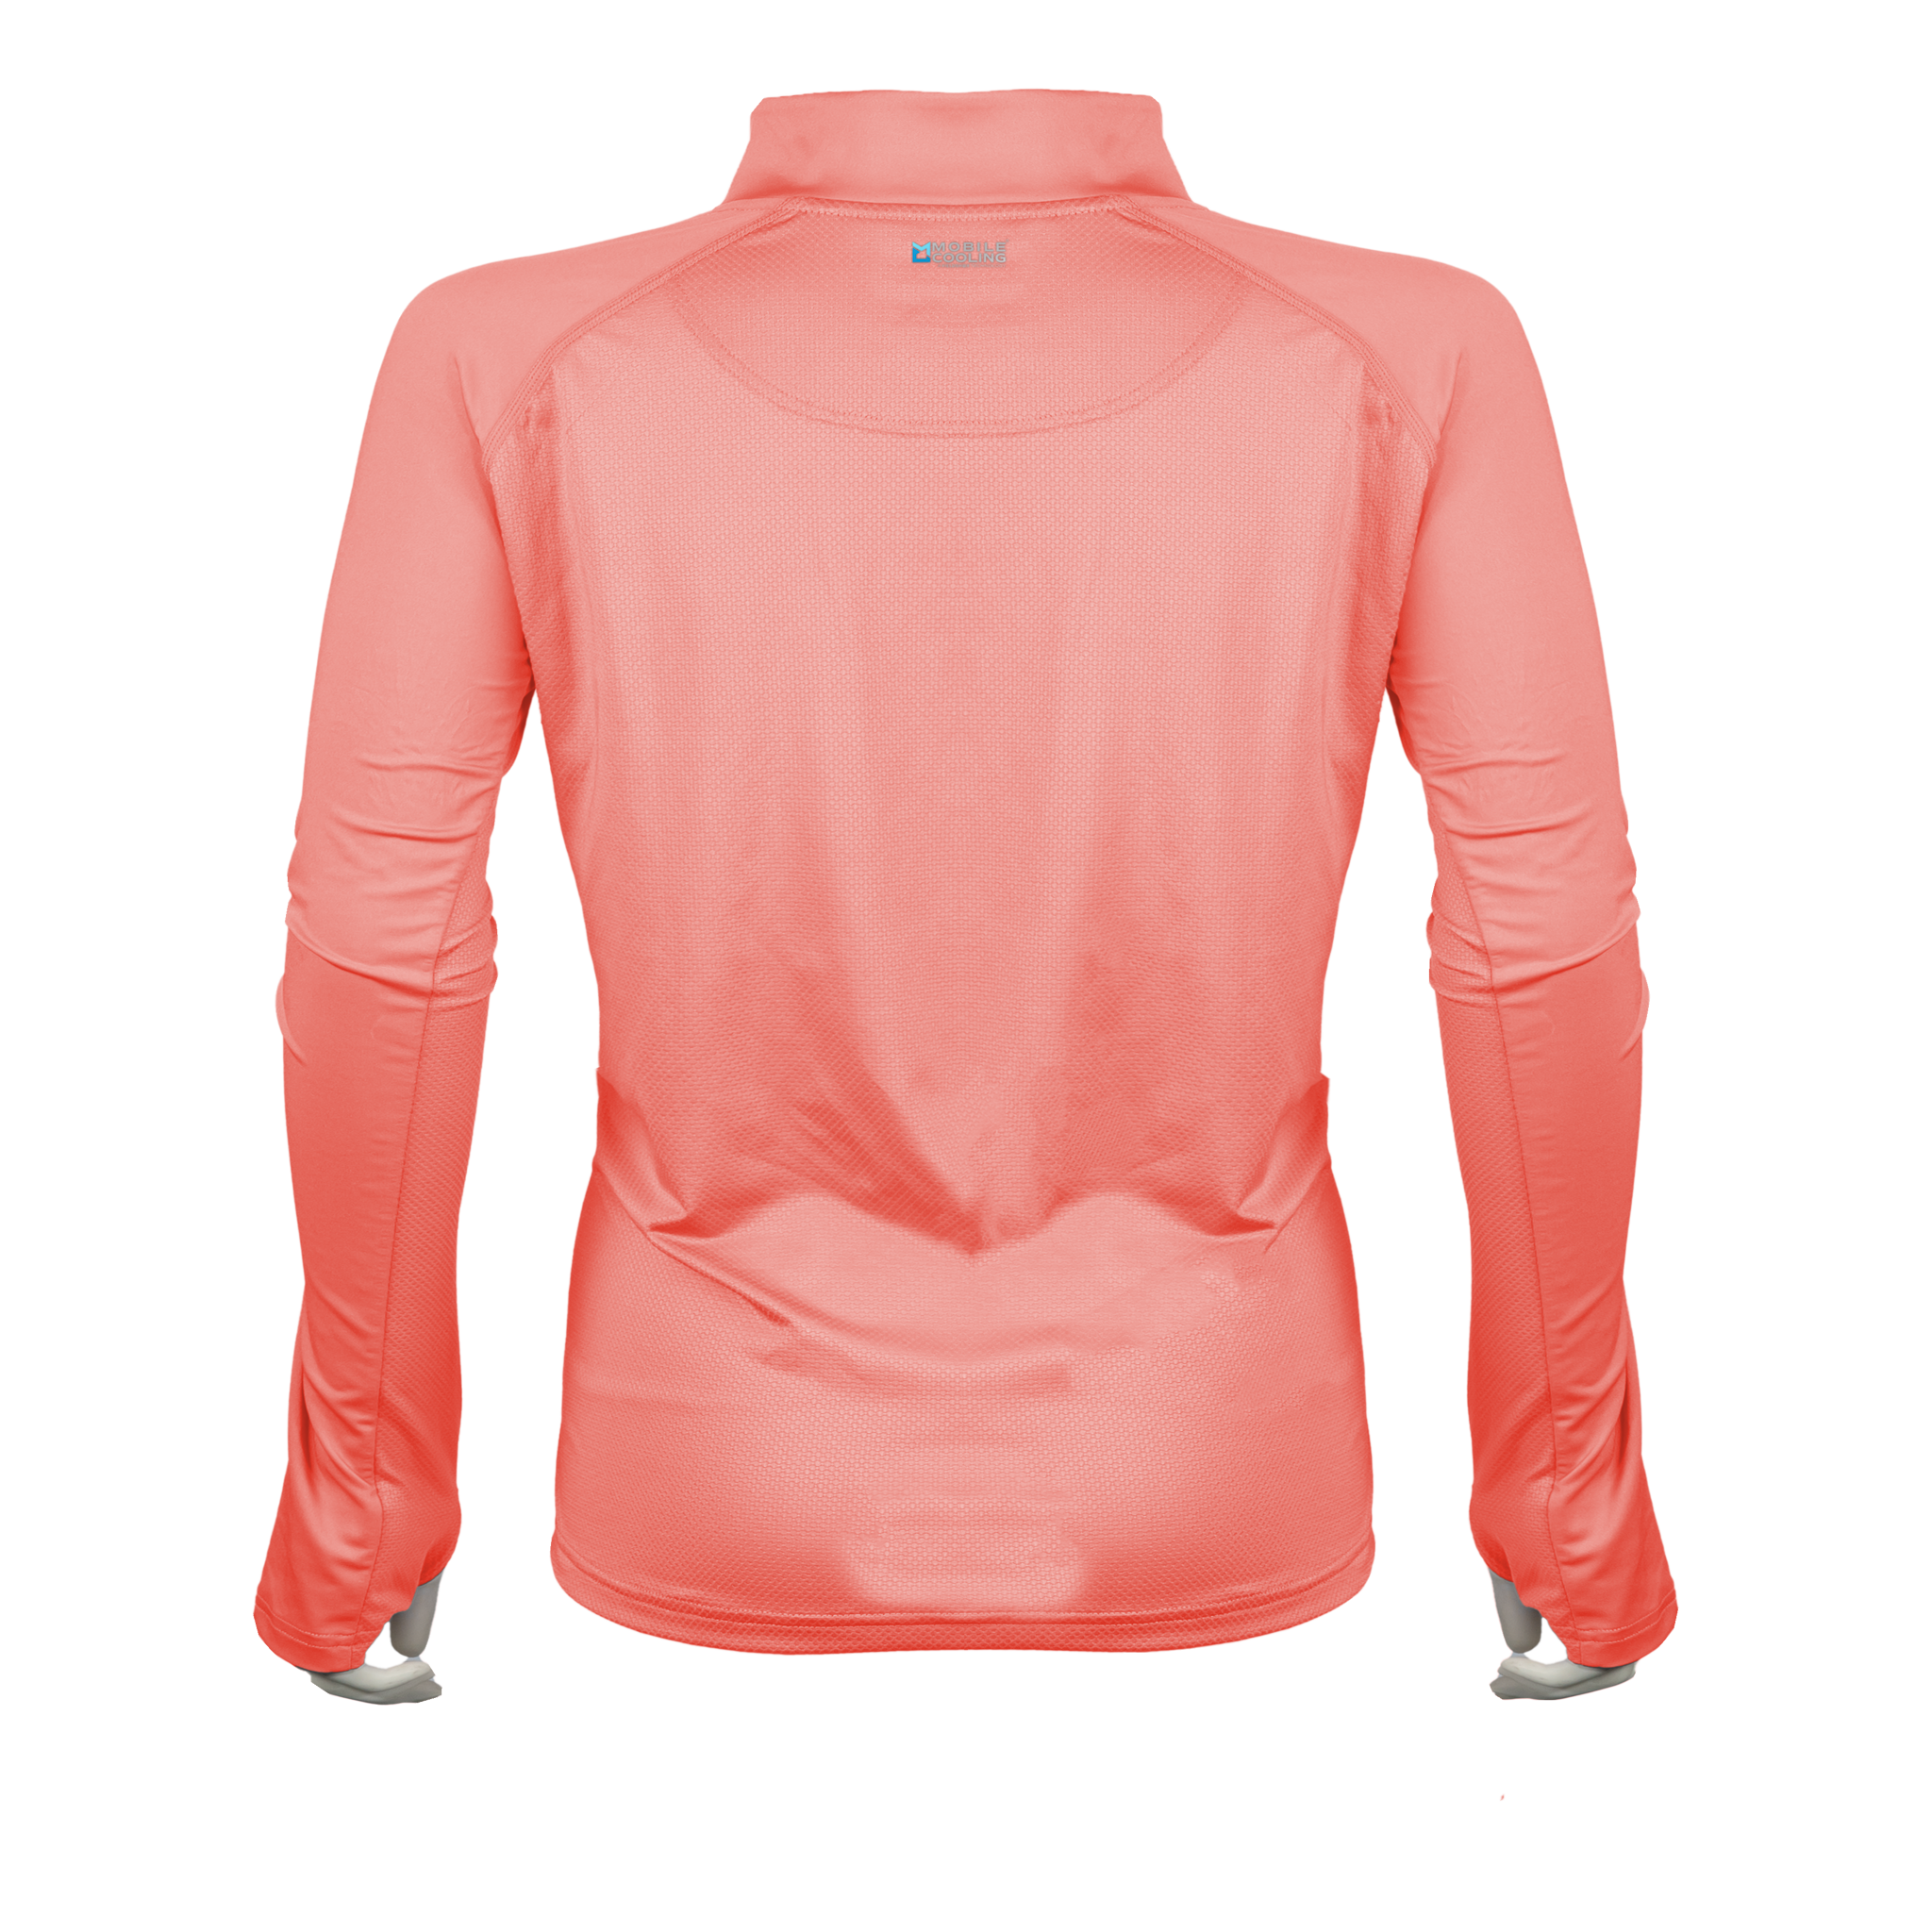 Under Armour Women's Pink Long Sleeve Logo Hoodie Sweatshirt Size XS